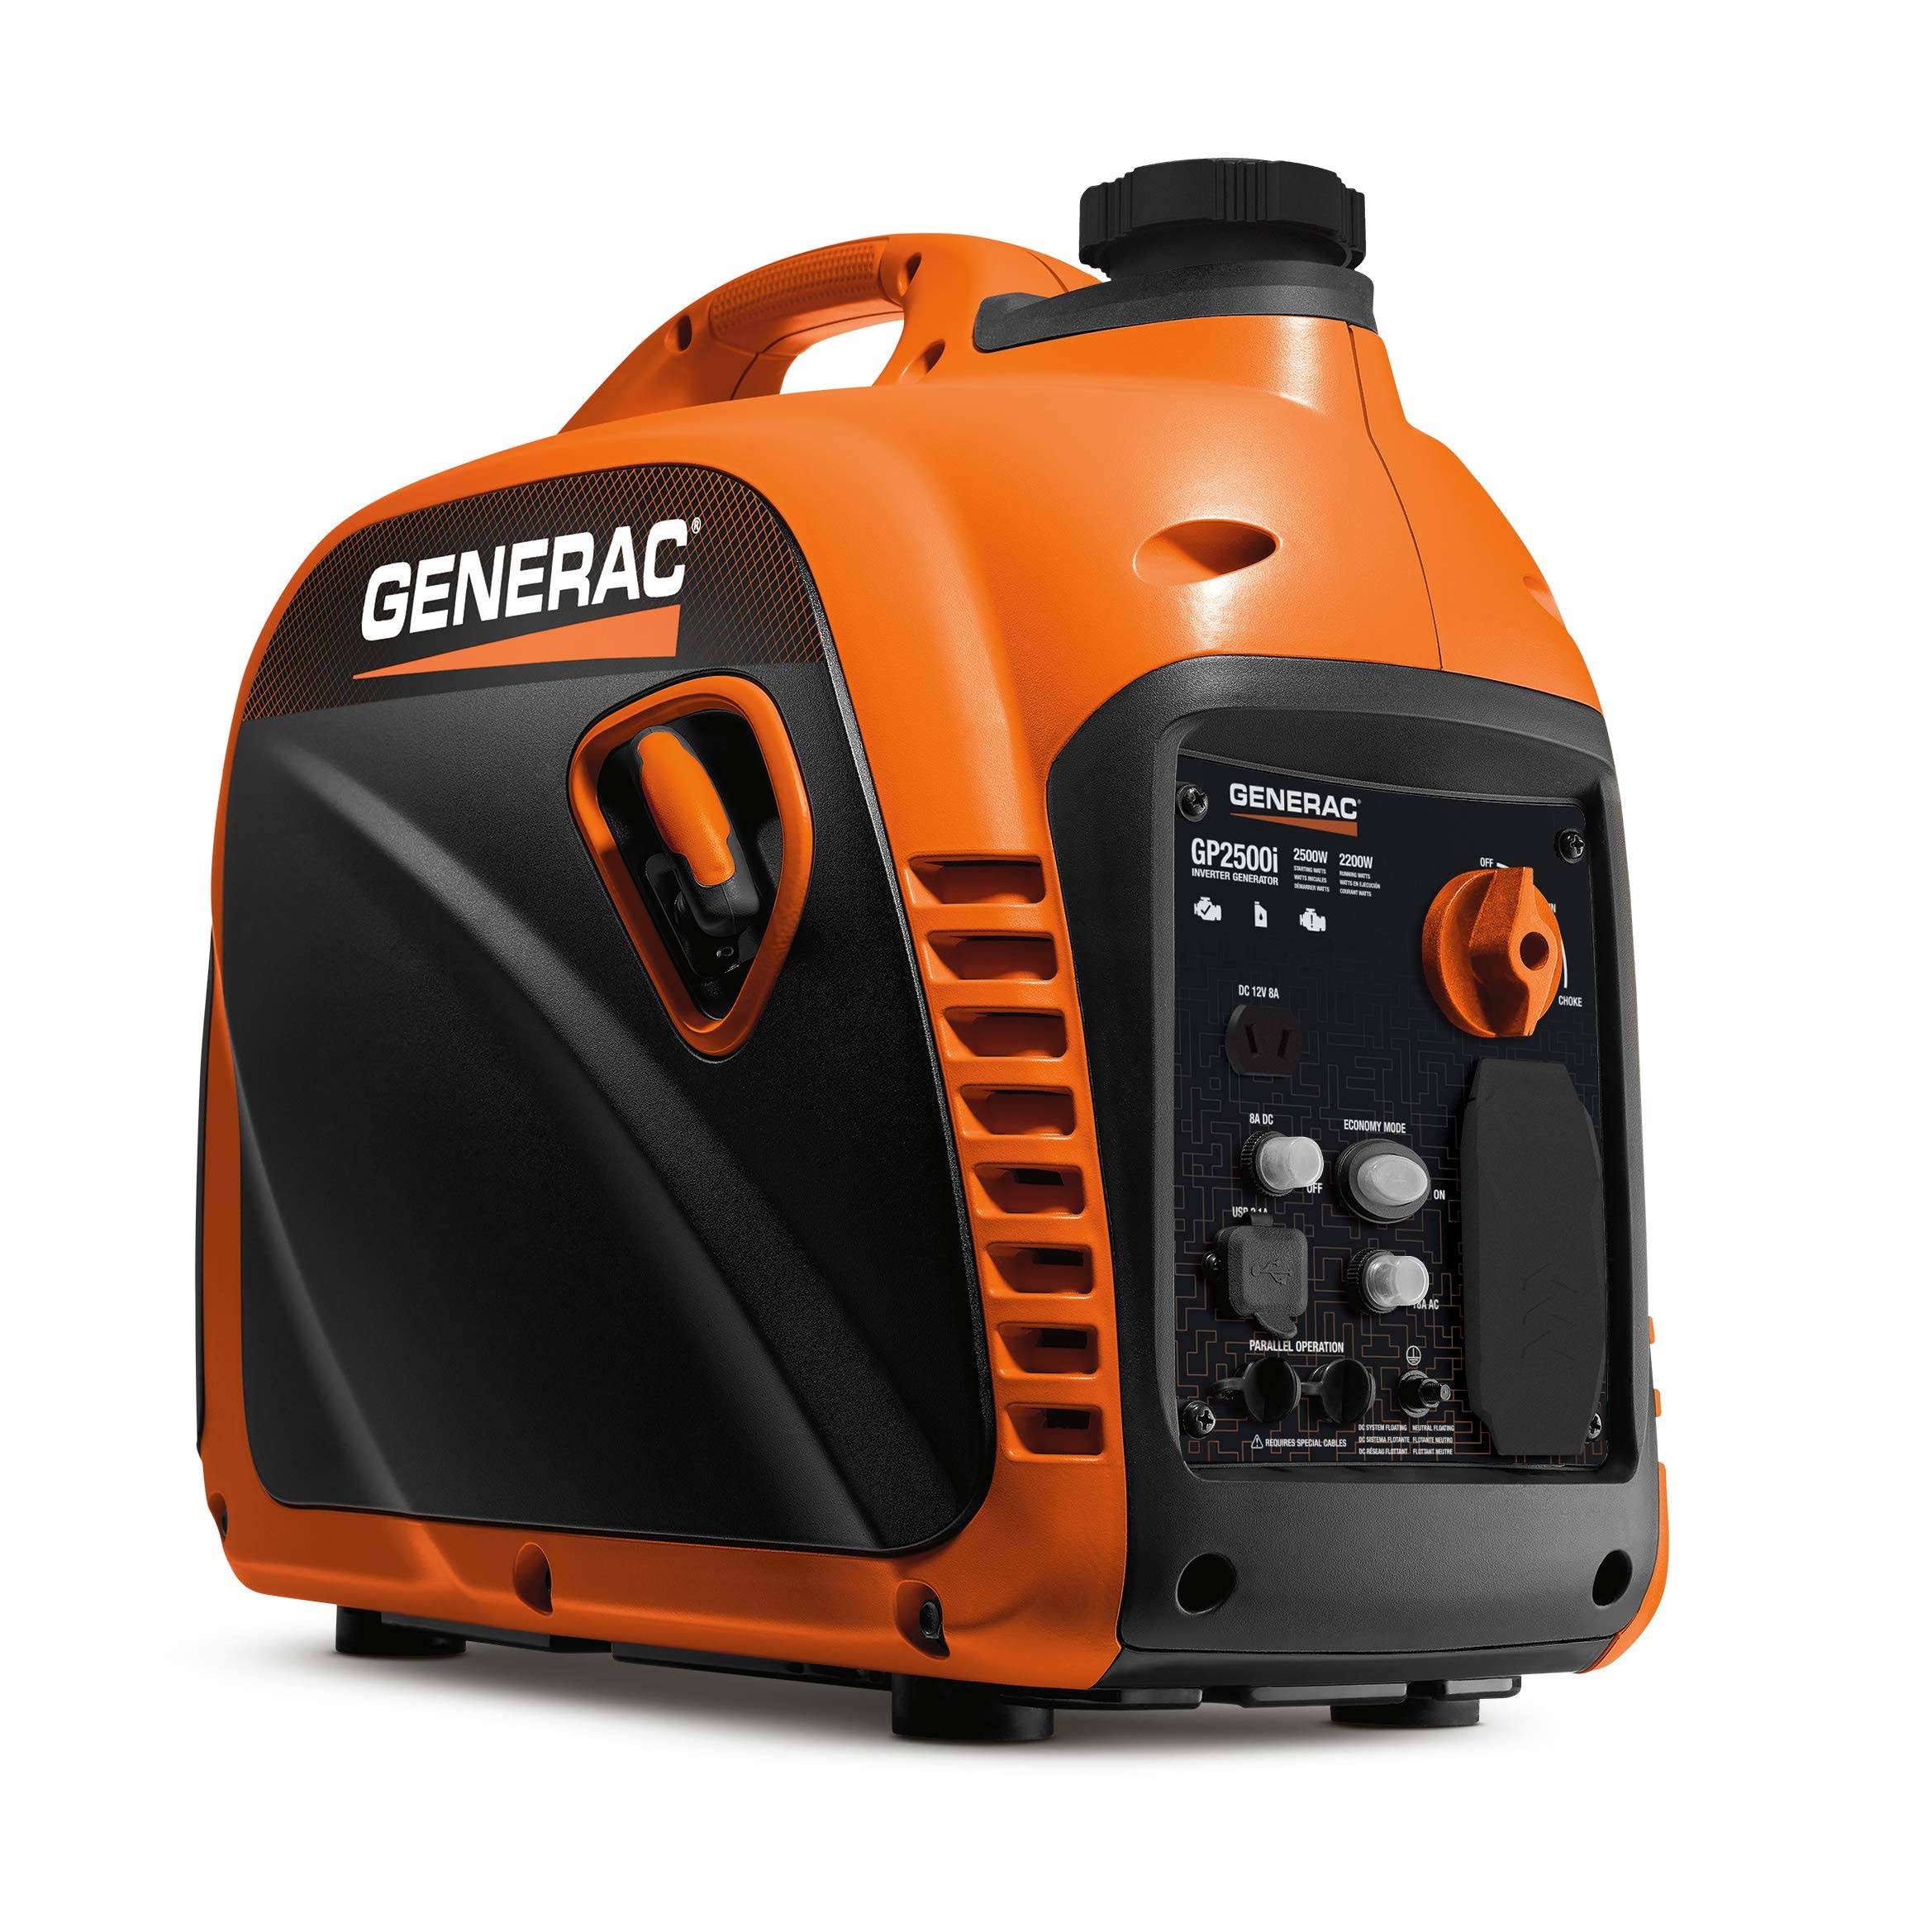 Generac GP2500i 8250 Inverter Generator, 18.3 A, 120 VAC, 2200 to 2500 W Output, Gasoline, 1 Gal Tank, Orange Housing